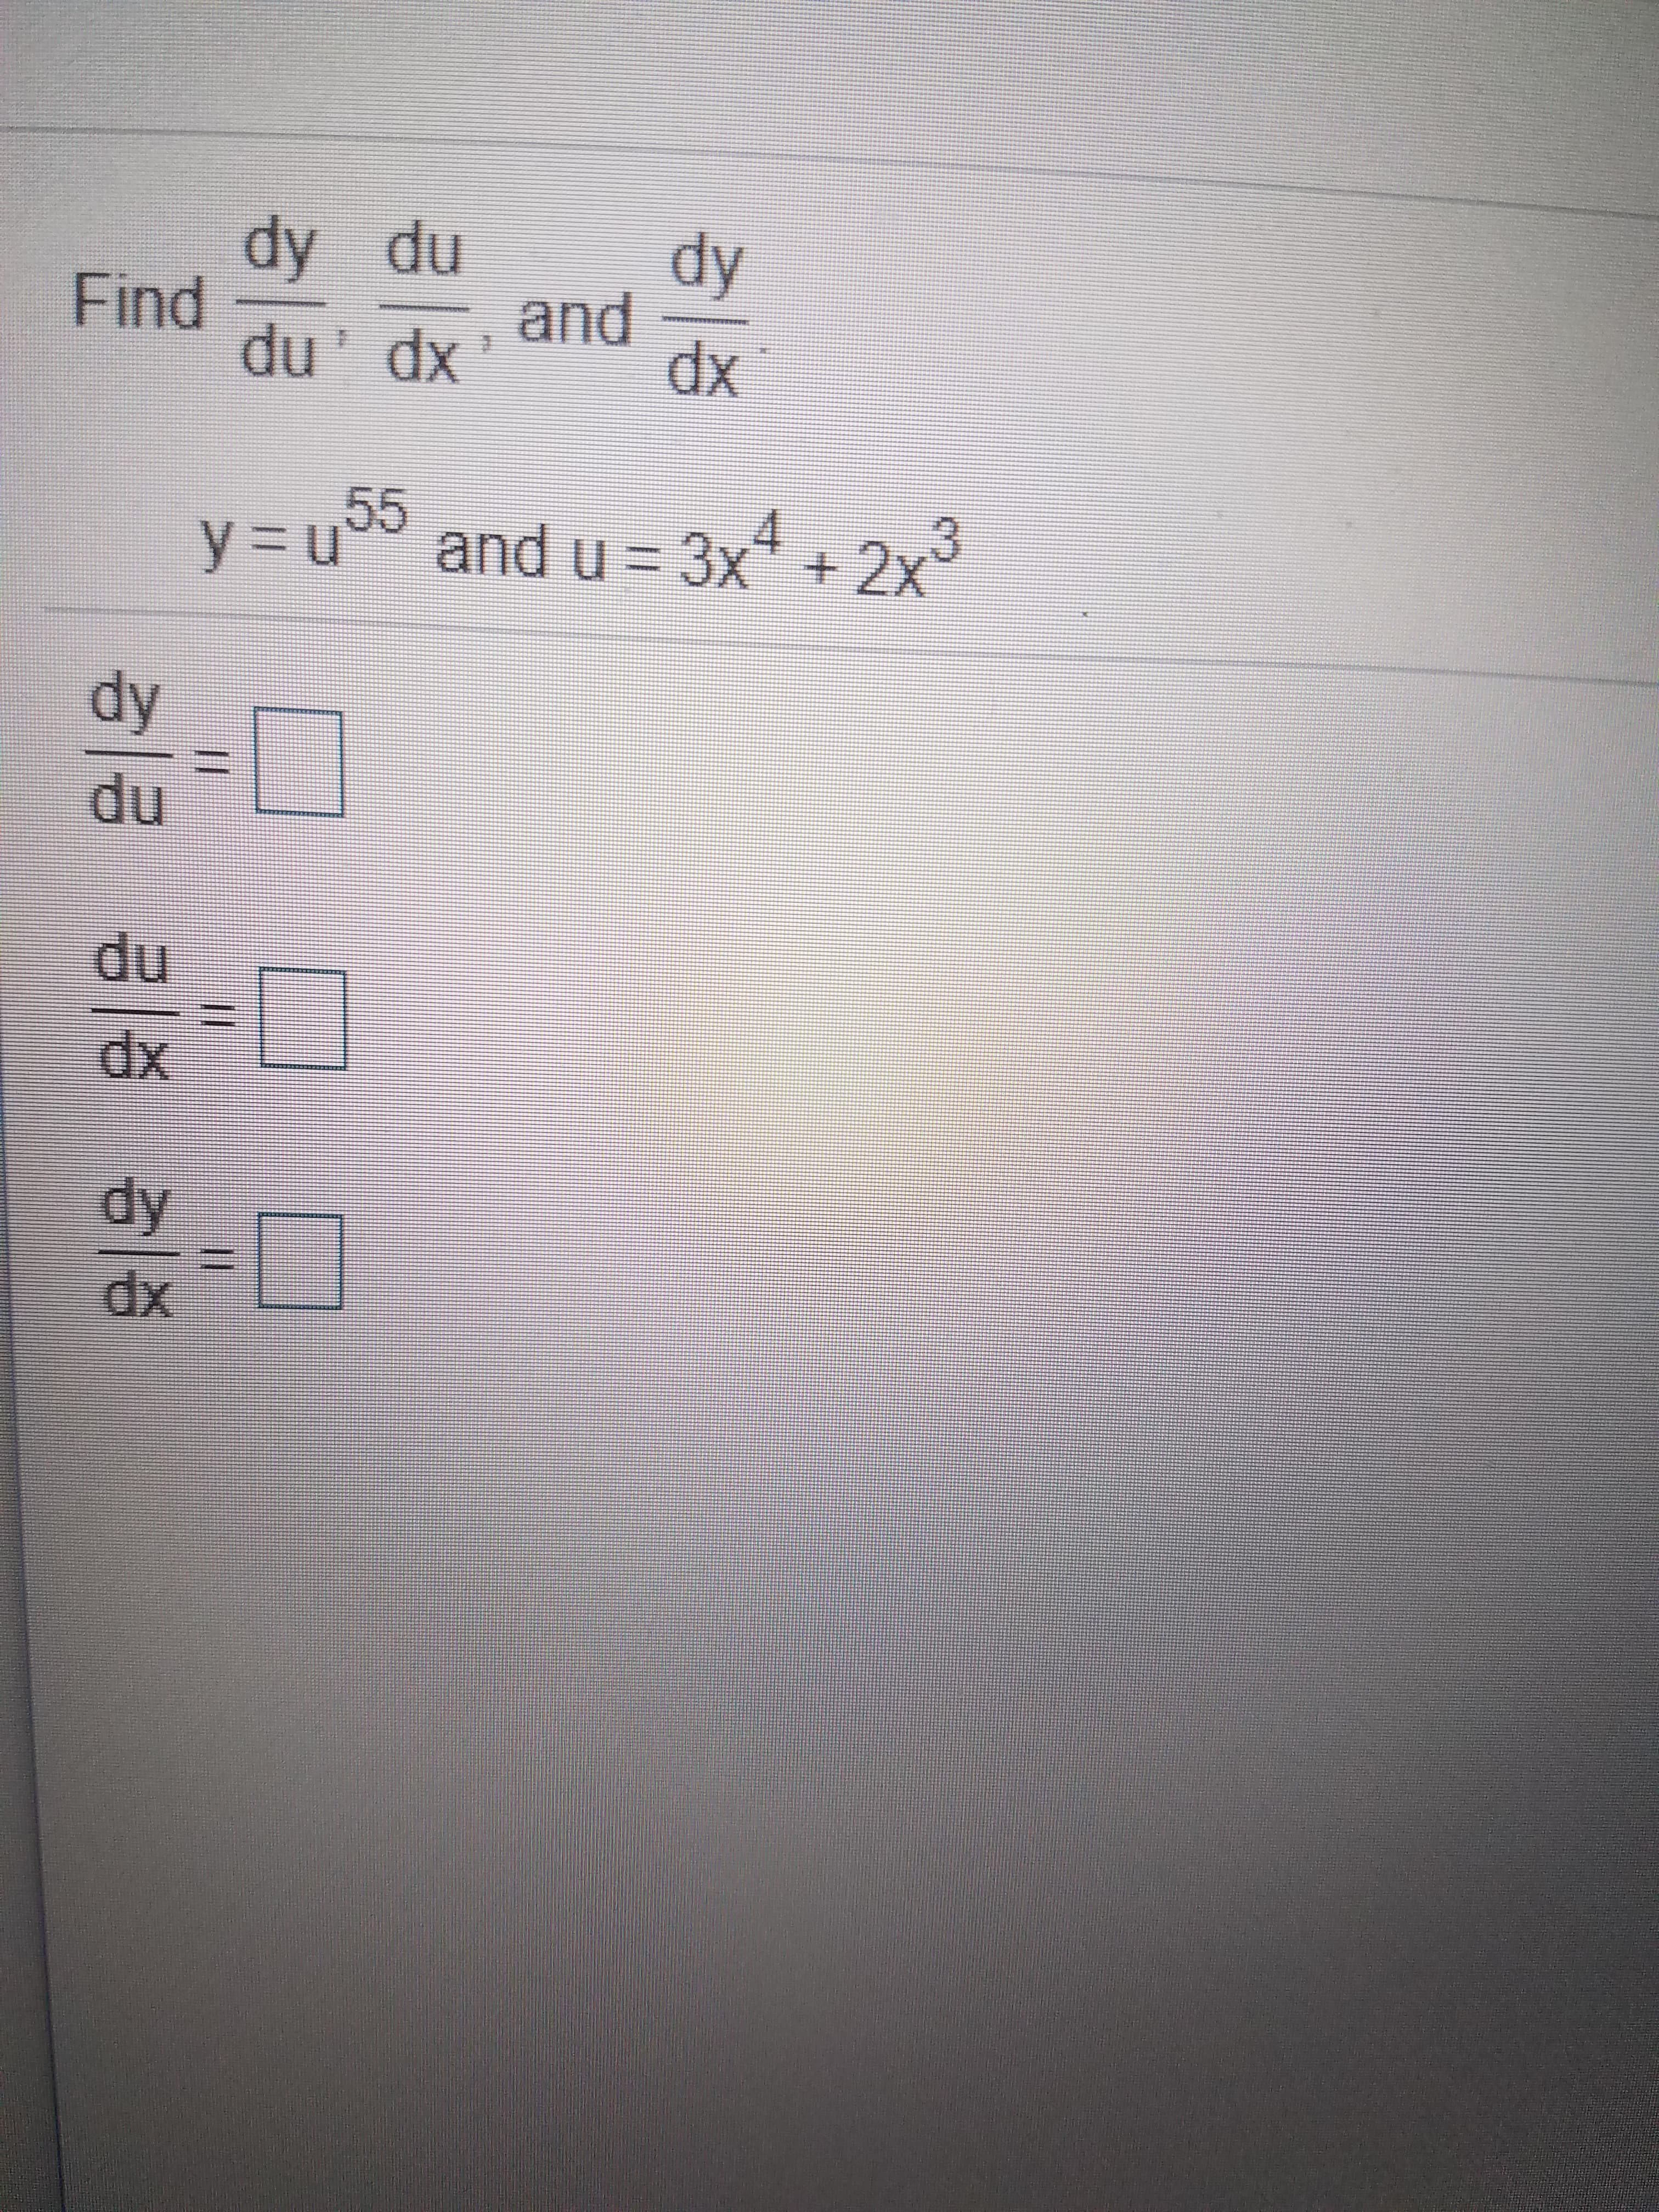 dy du
and
du' dx
dy
Find
dx
55
and u 3x + 2x
y=u
dy
du
du
dx
dy
dx
히즘
